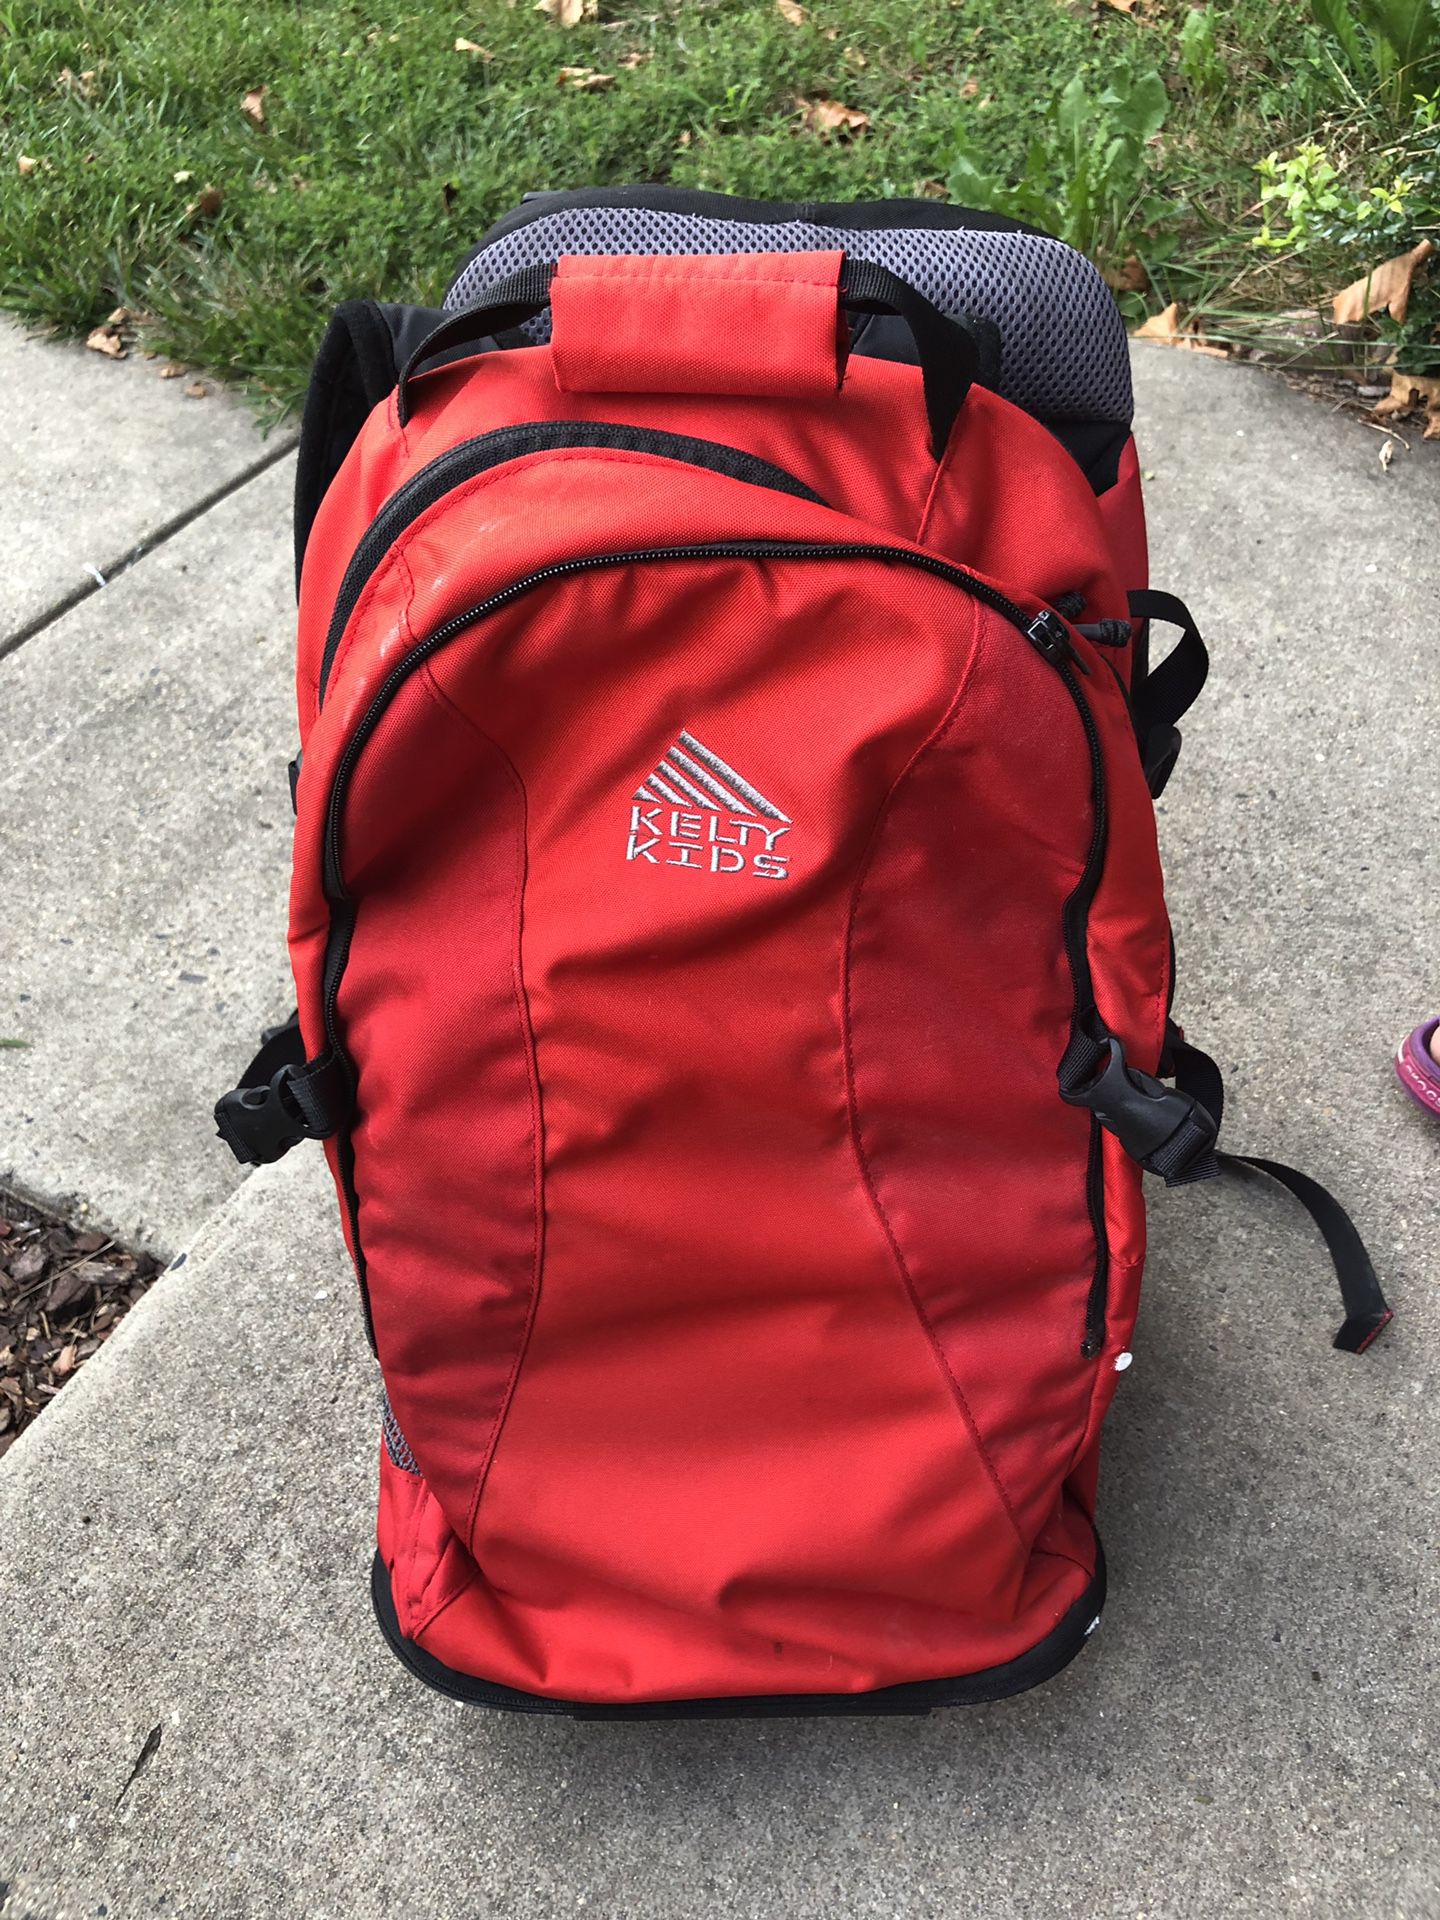 KELTY KIDS , Hiking bag /backpack/ baby carrier